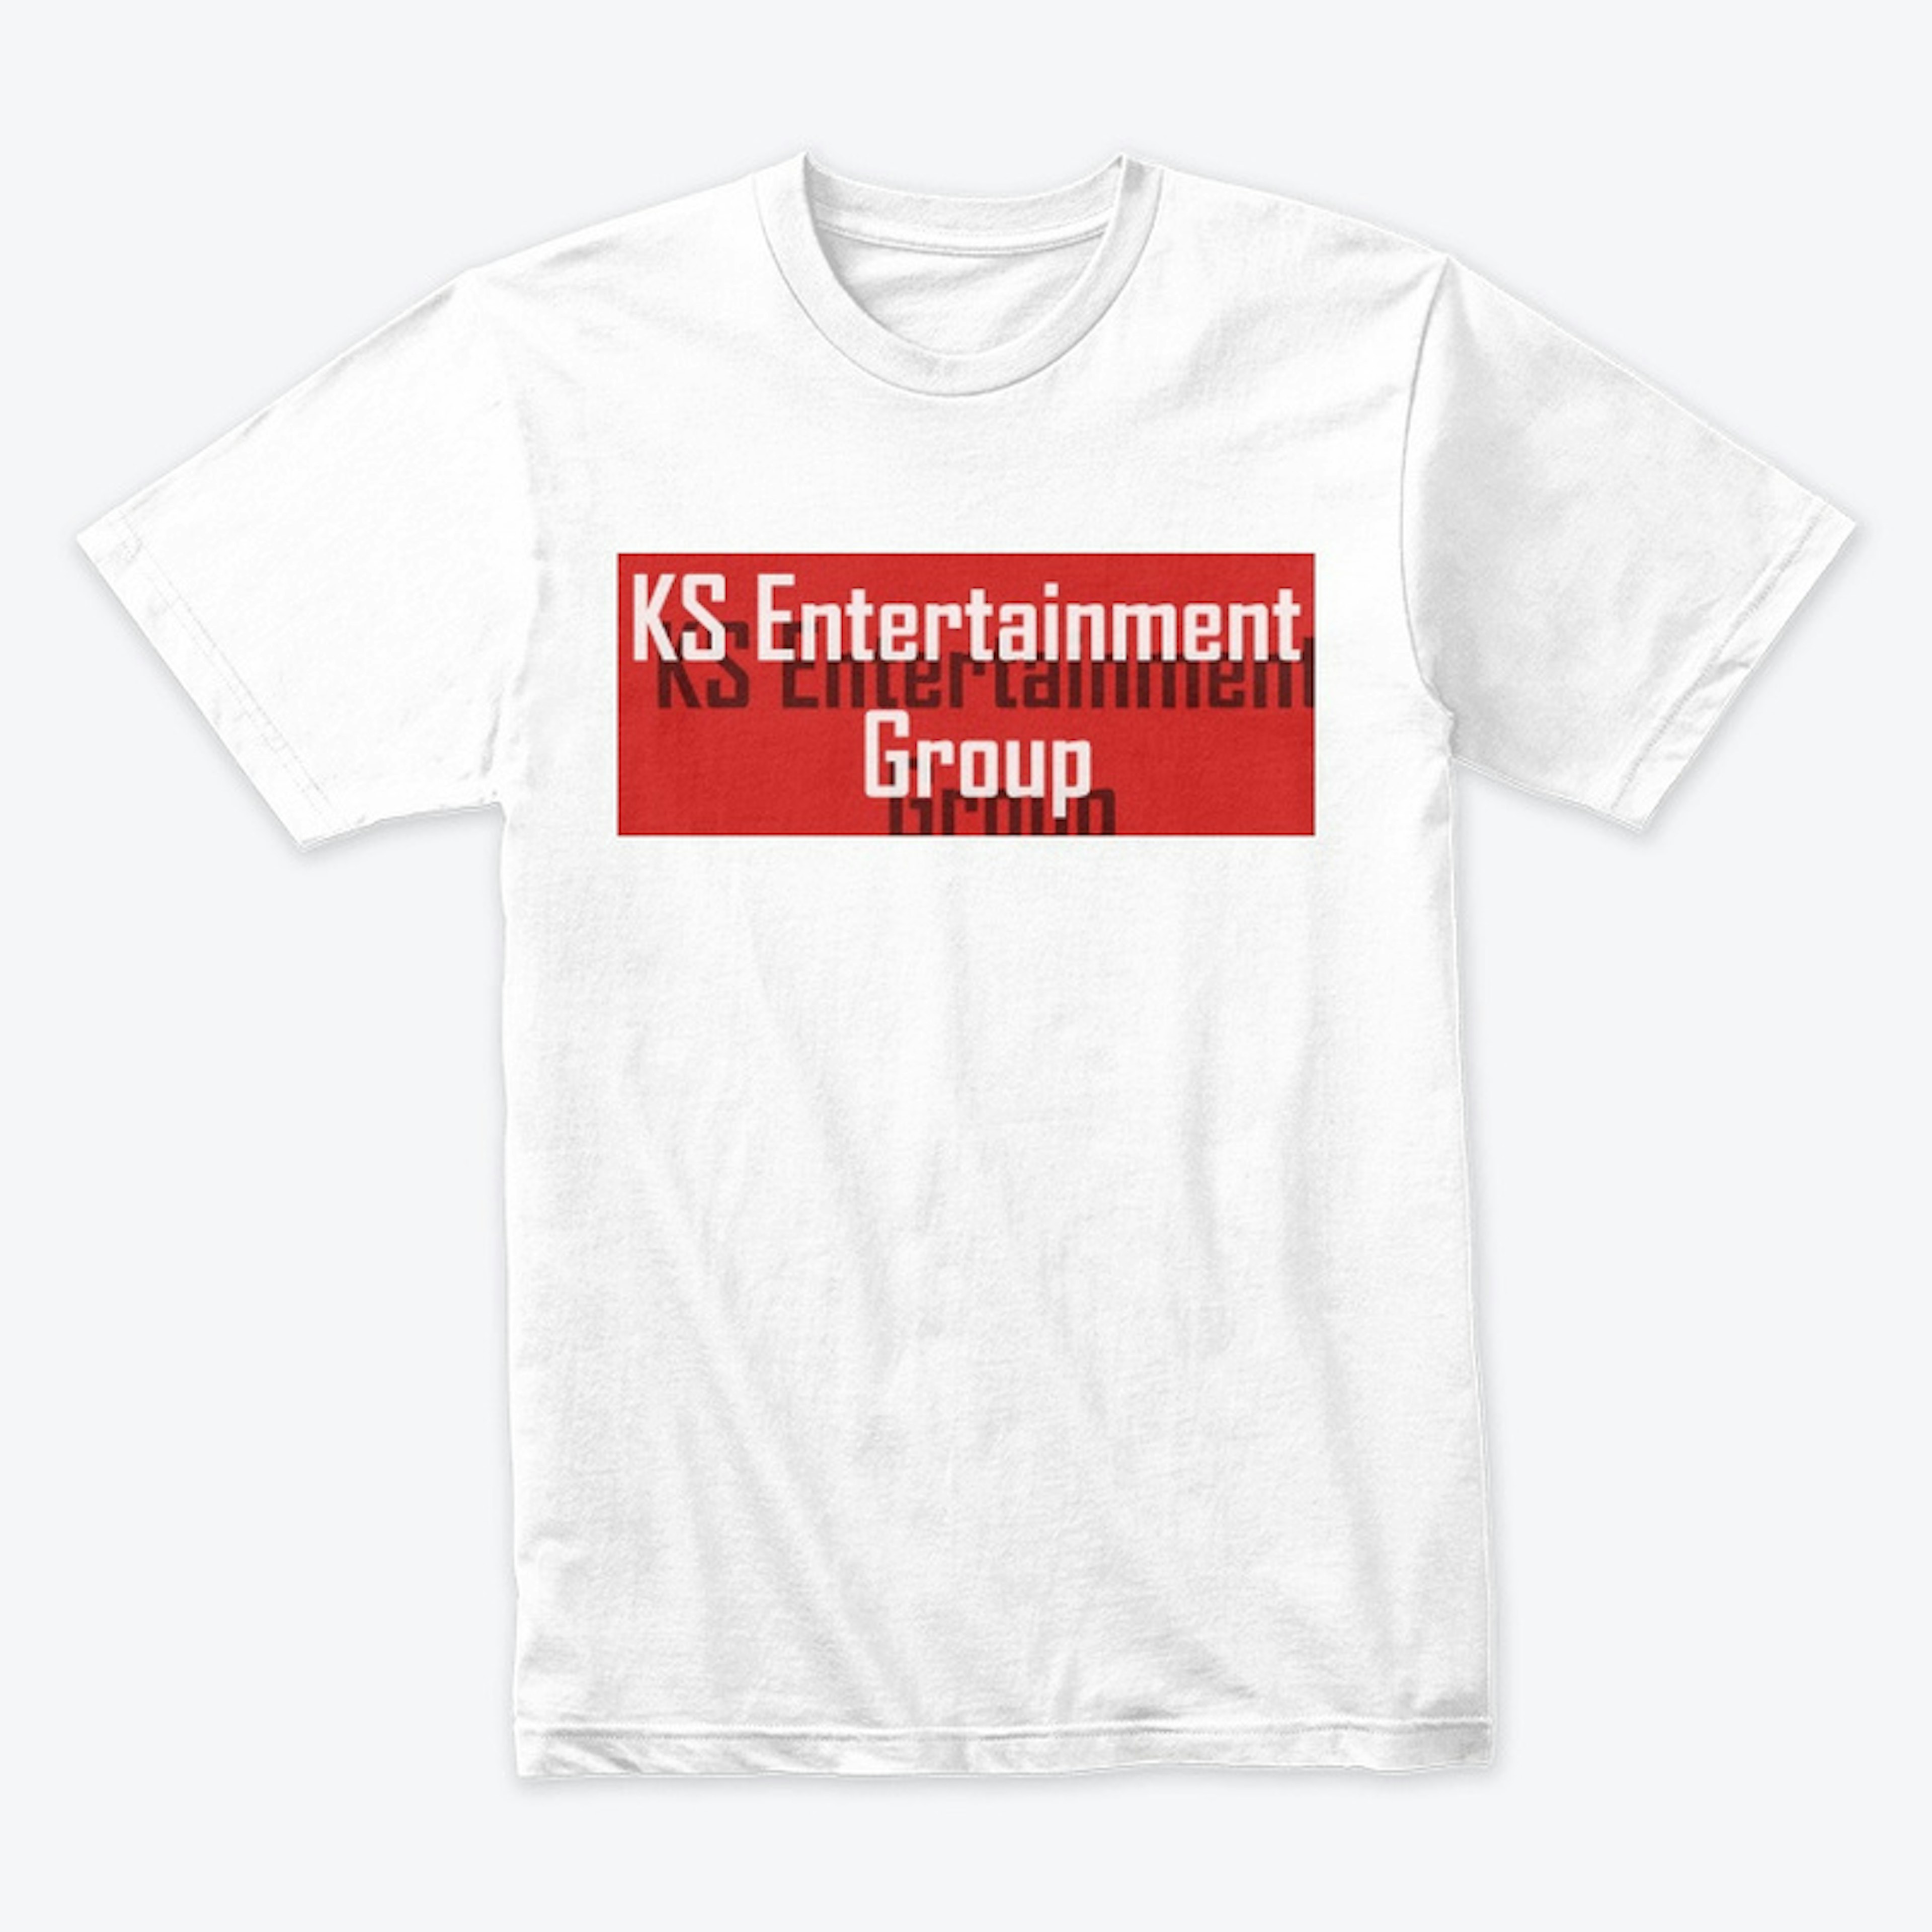 KS Entertainment Group Logo Tee